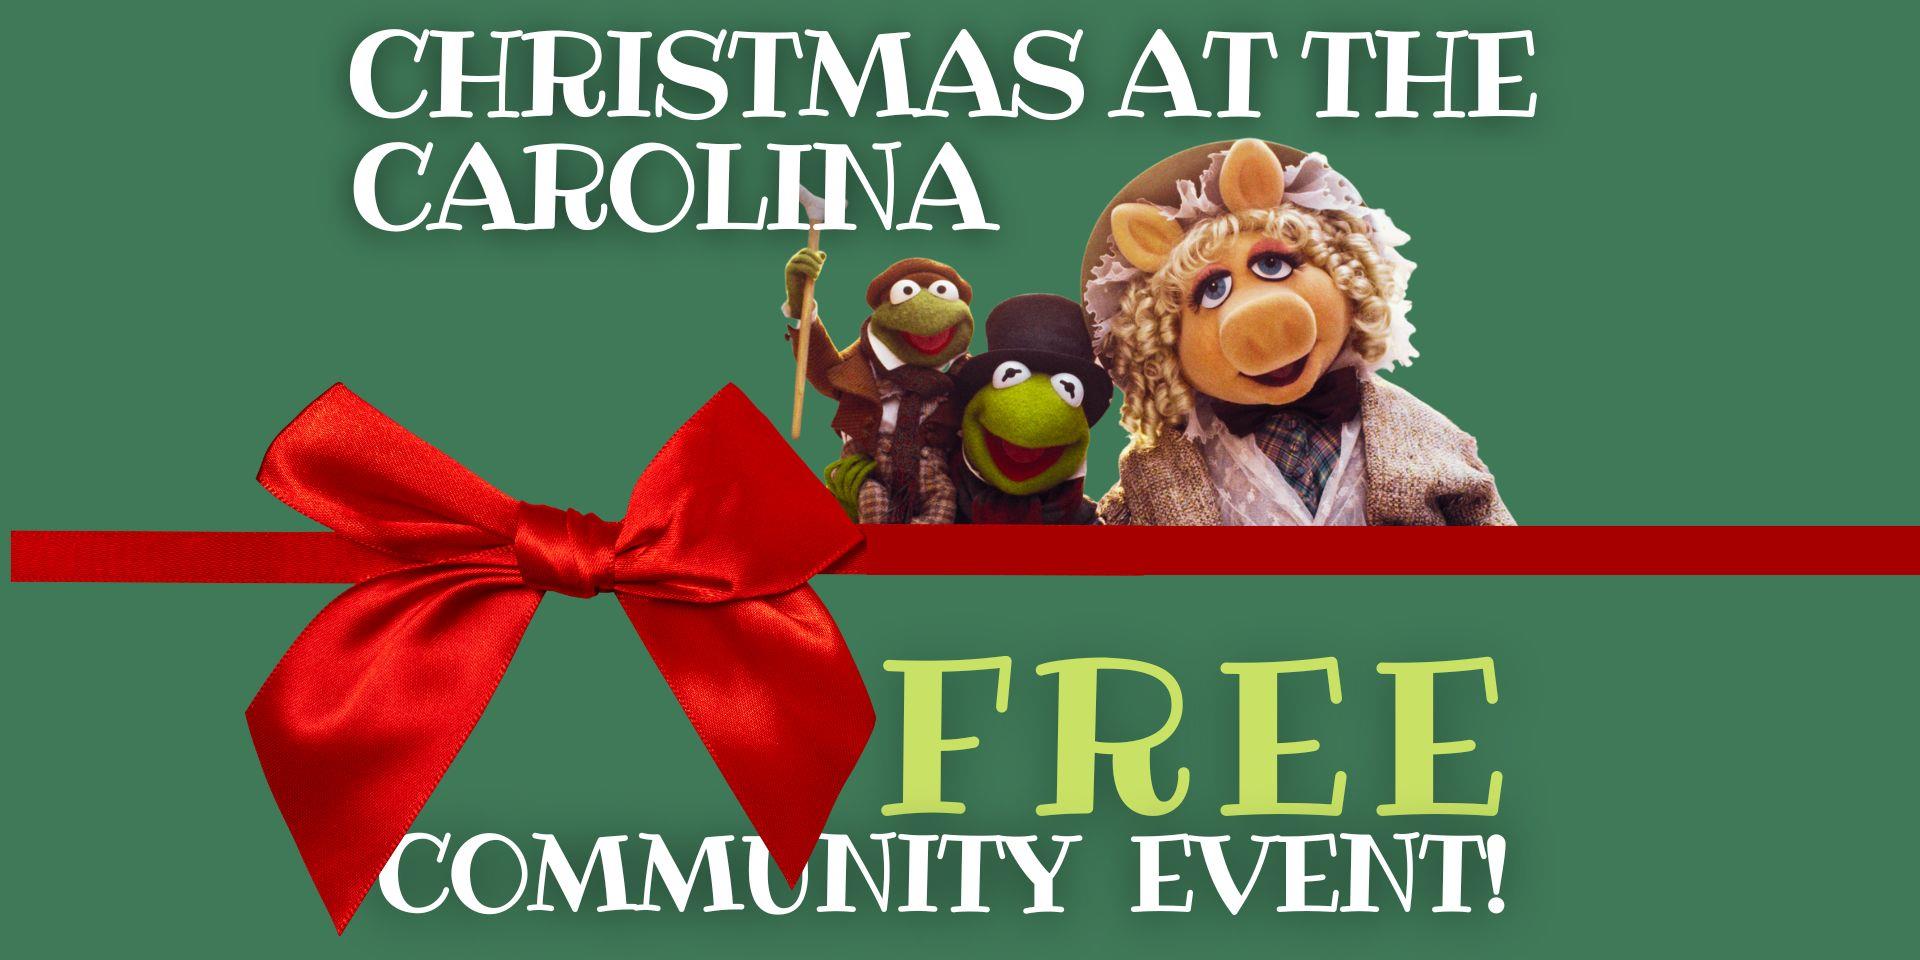 The Muppet Christmas Carol - Christmas at the Carolina